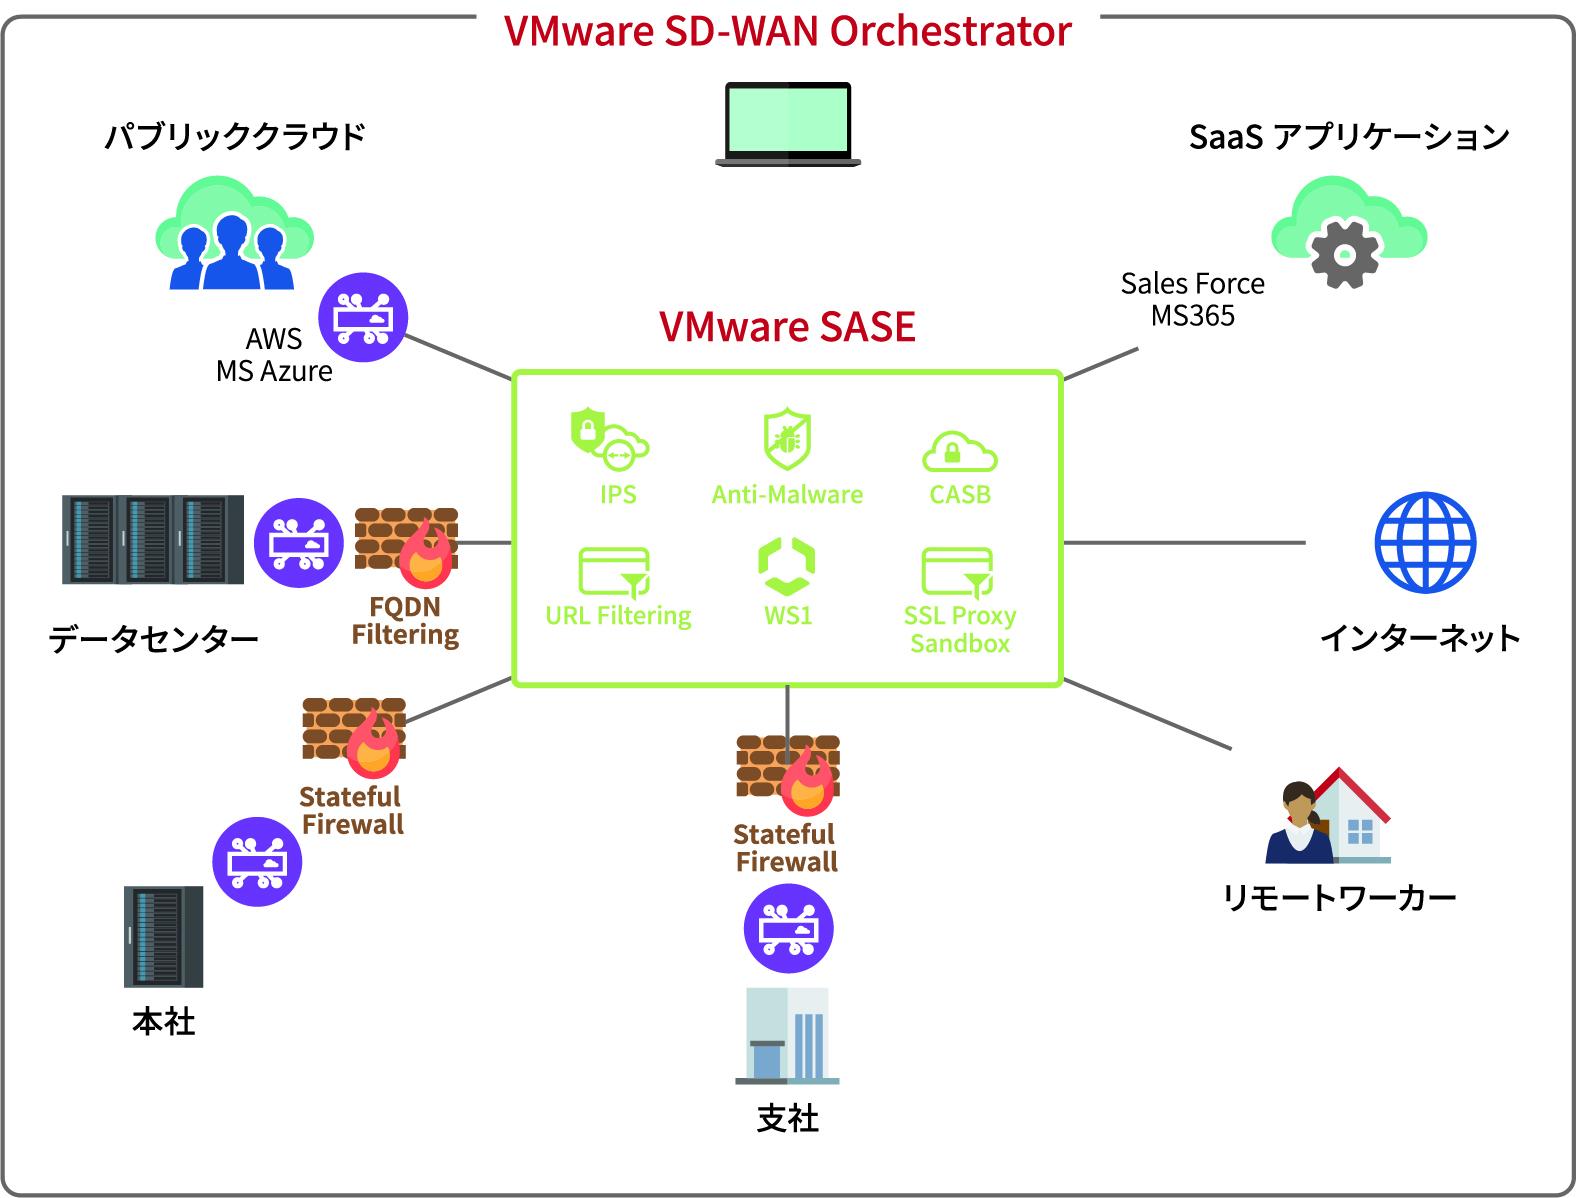 1_VMware SD-WAN Orchestrator.jpg